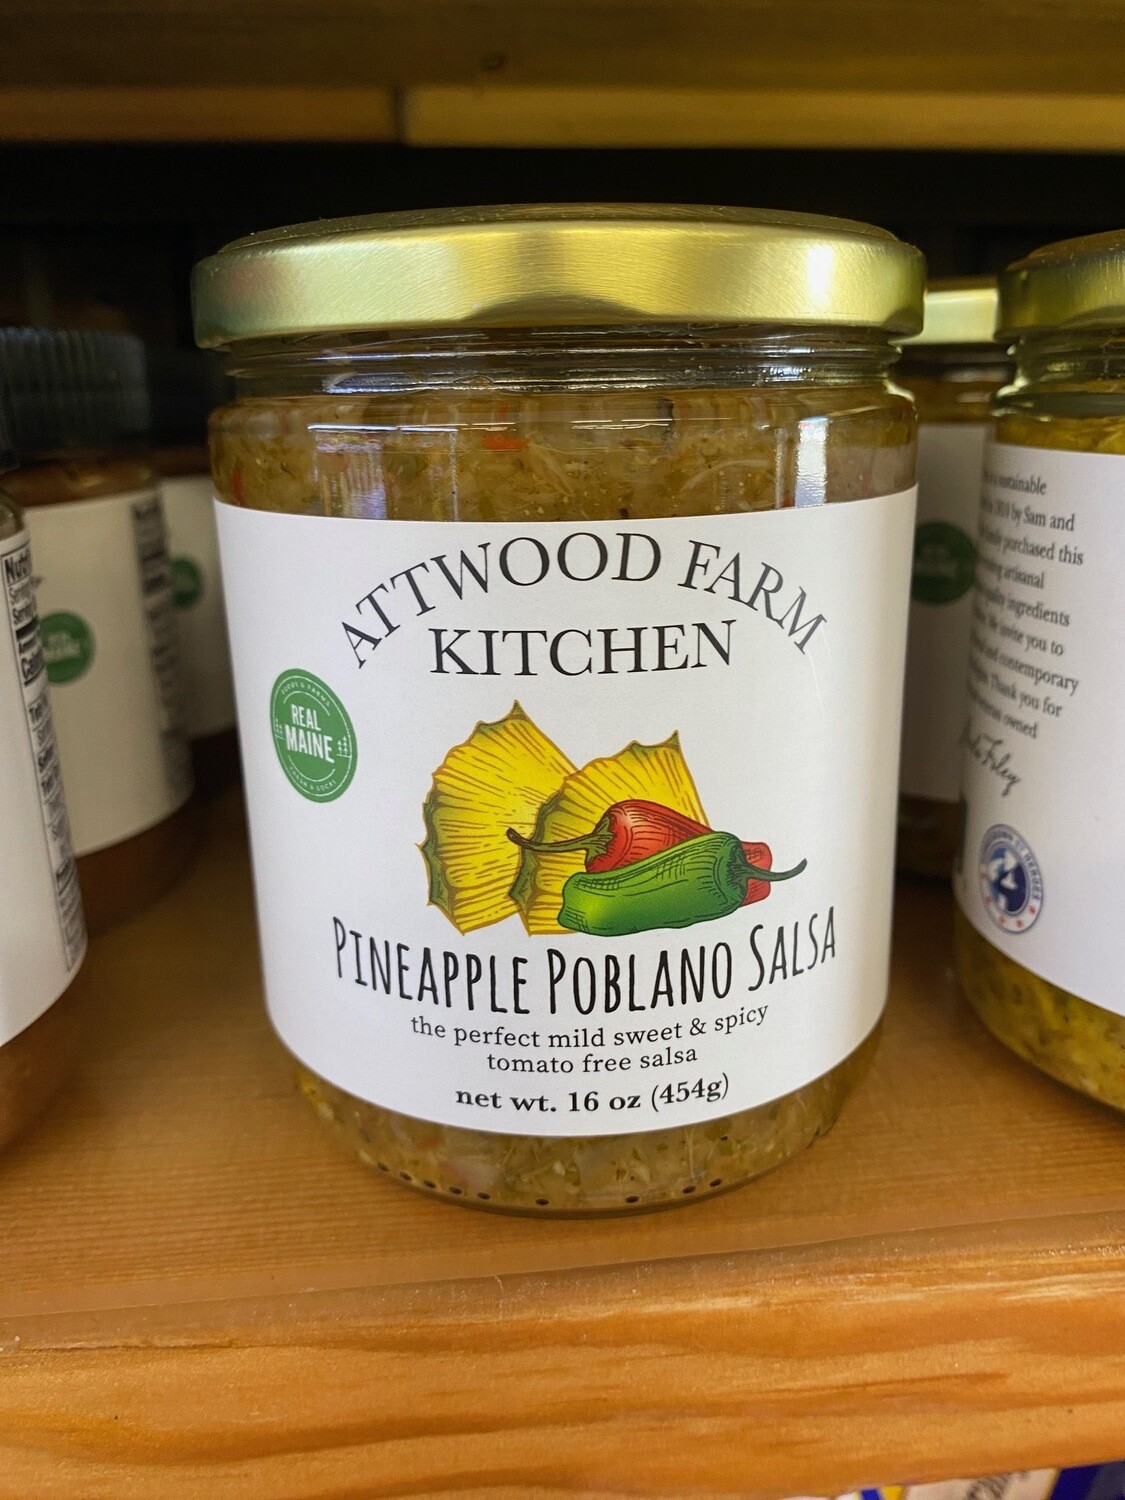 Attwood Farm - Pineapple Poblano Salsa